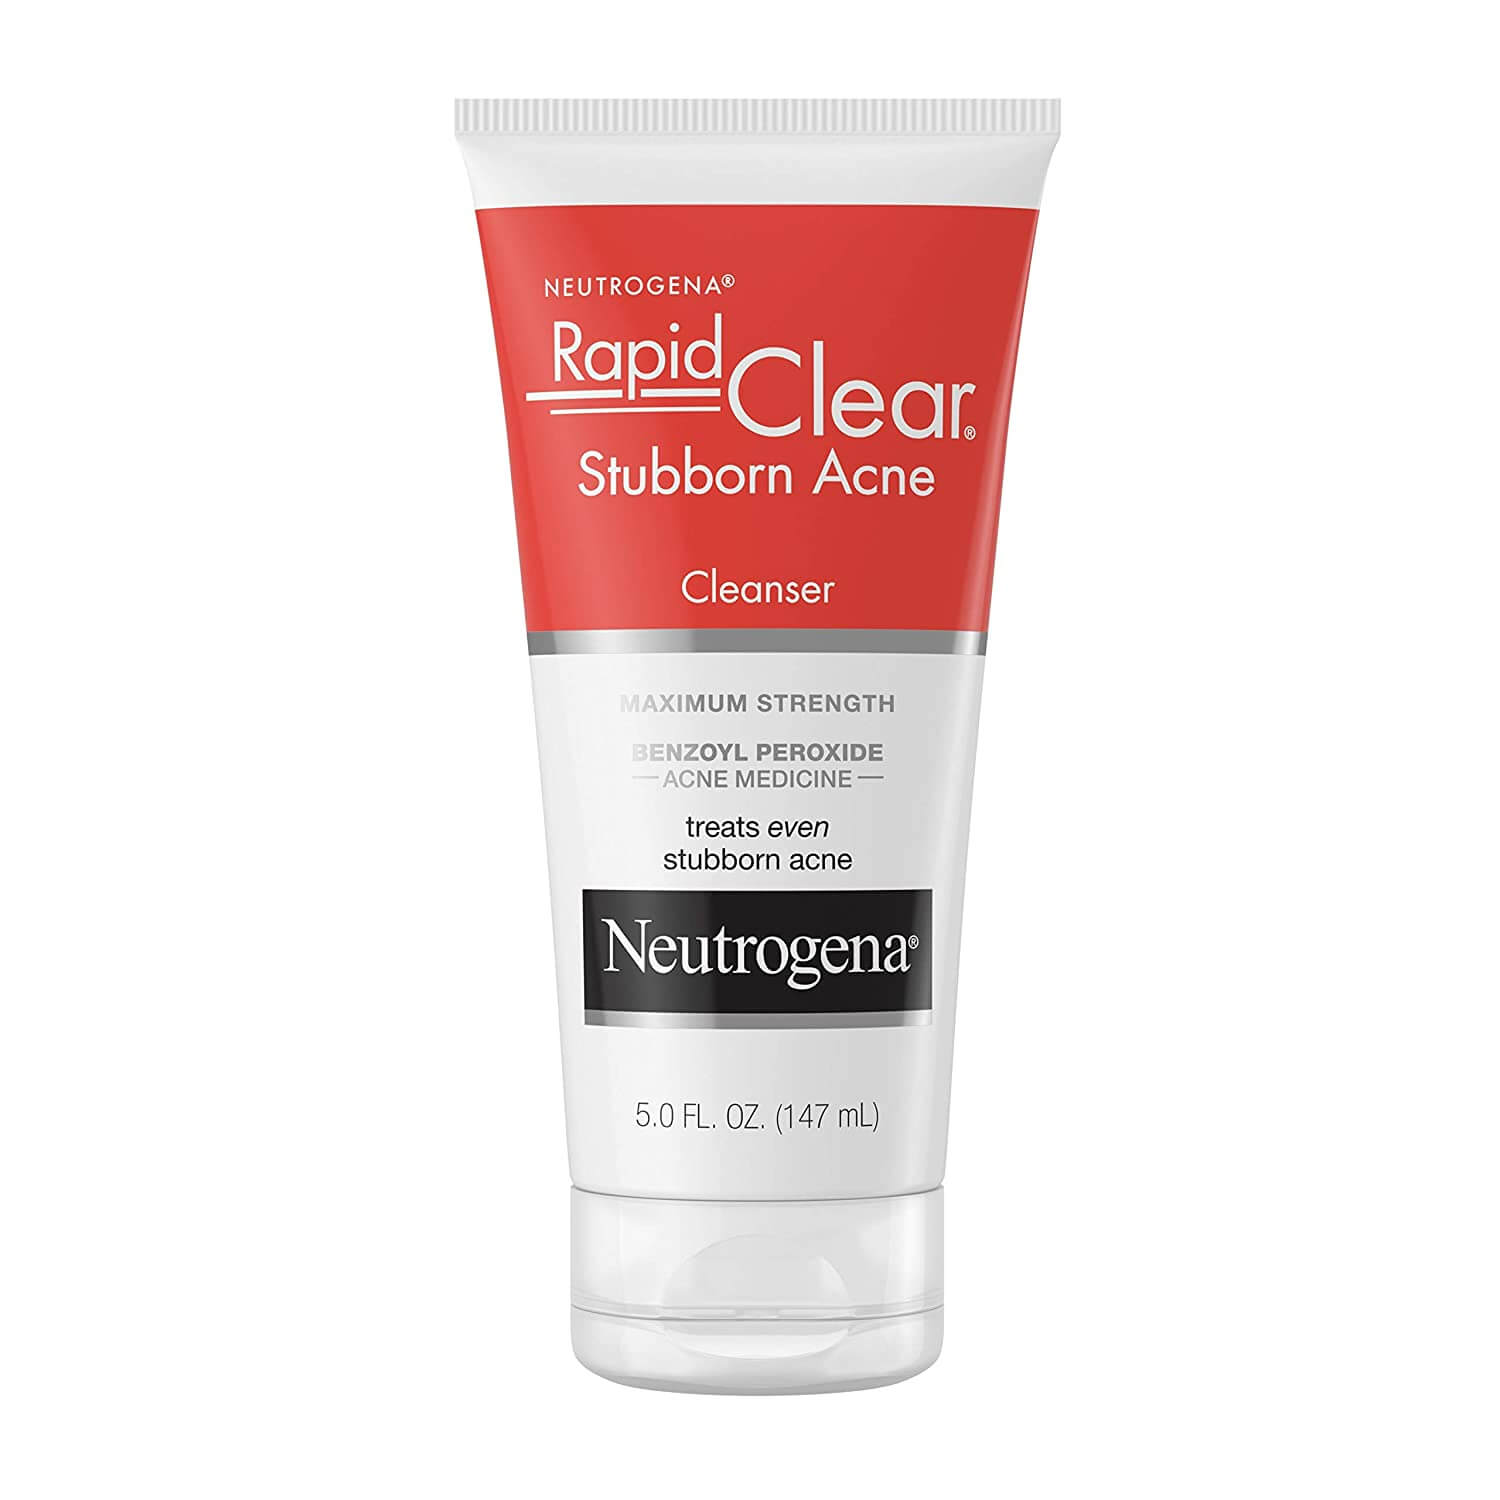 neutrogena rapid clear stubborn acne spot gel review